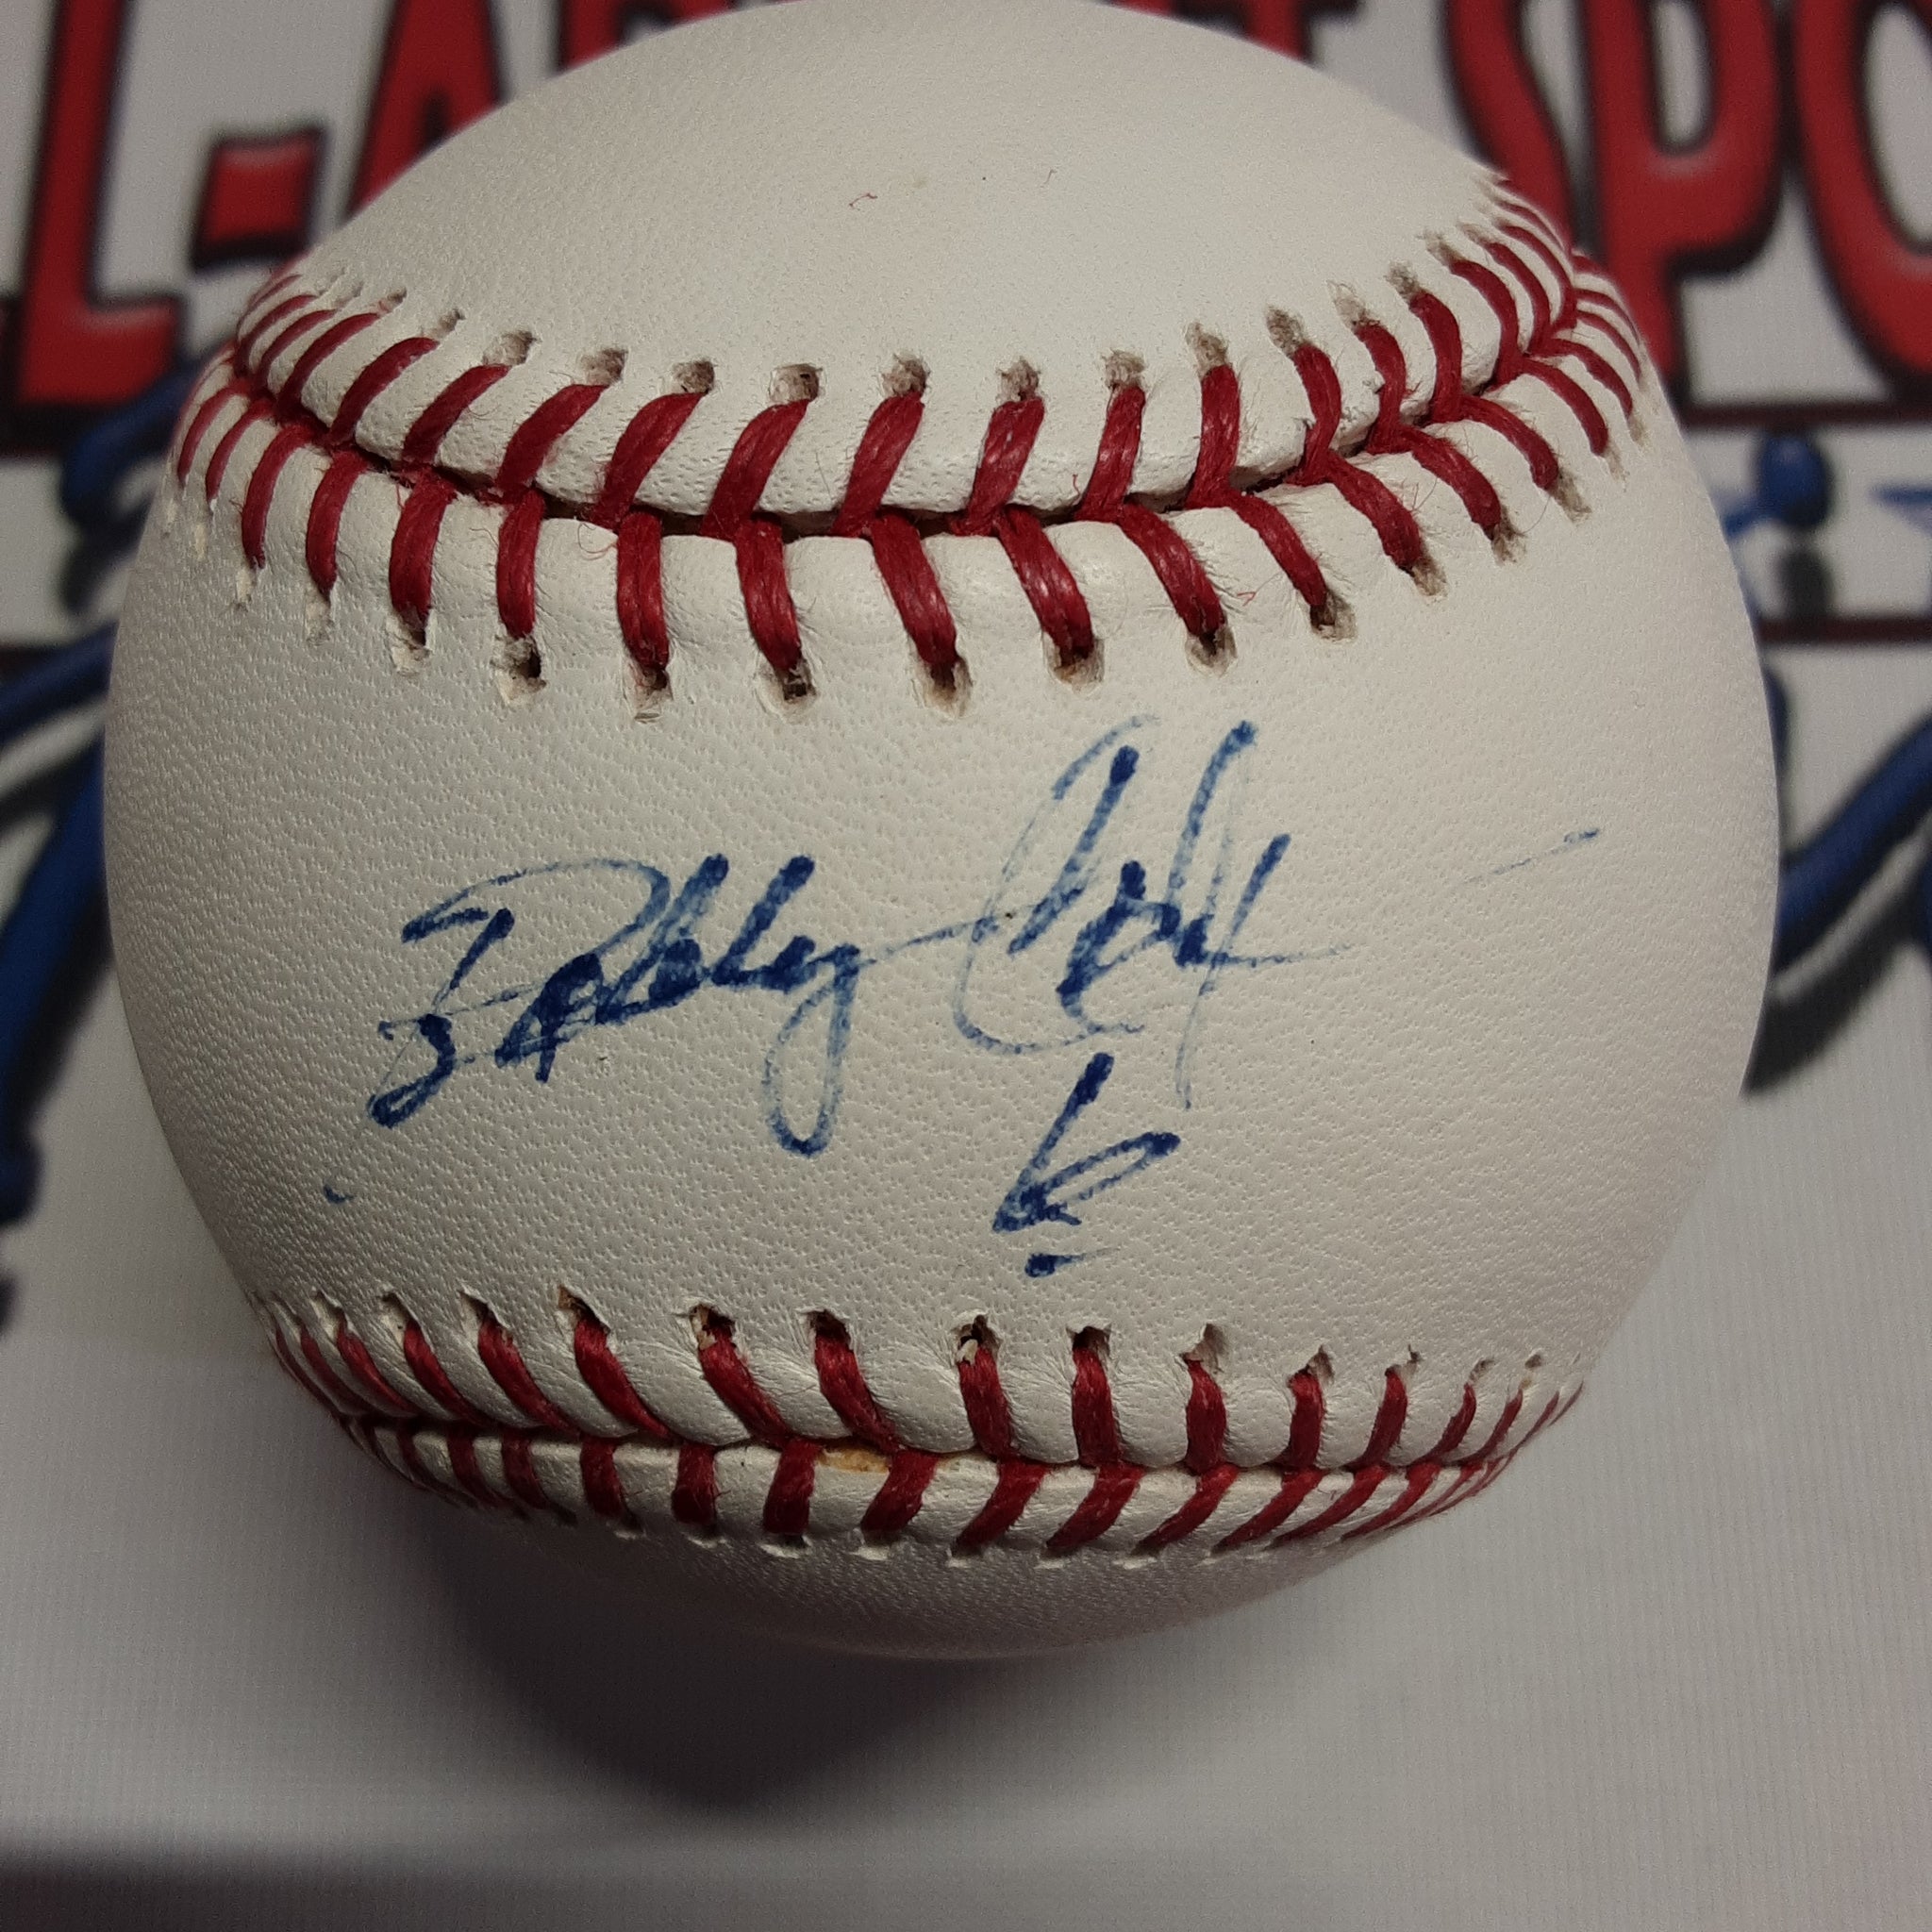 Bobby Cox Authentic Signed Baseball Autographed JSA.